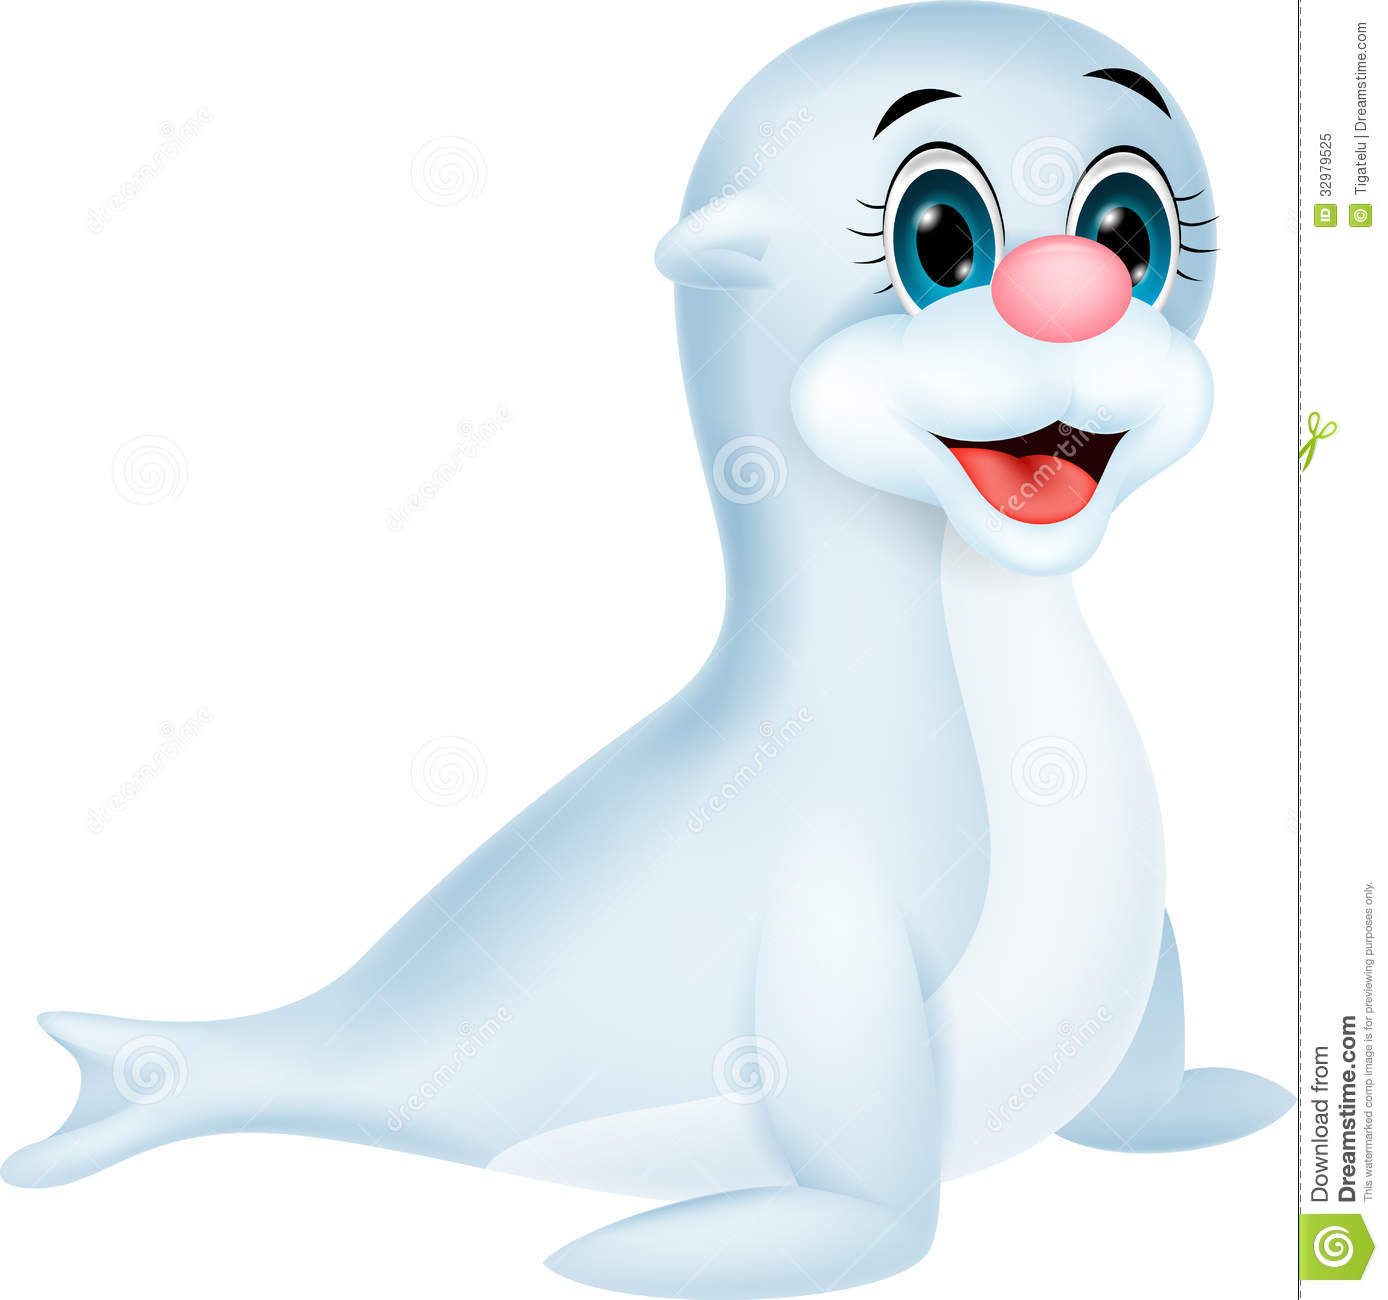 Baby Seal Cartoon Royalty Free Stock Photo   Image  32979525